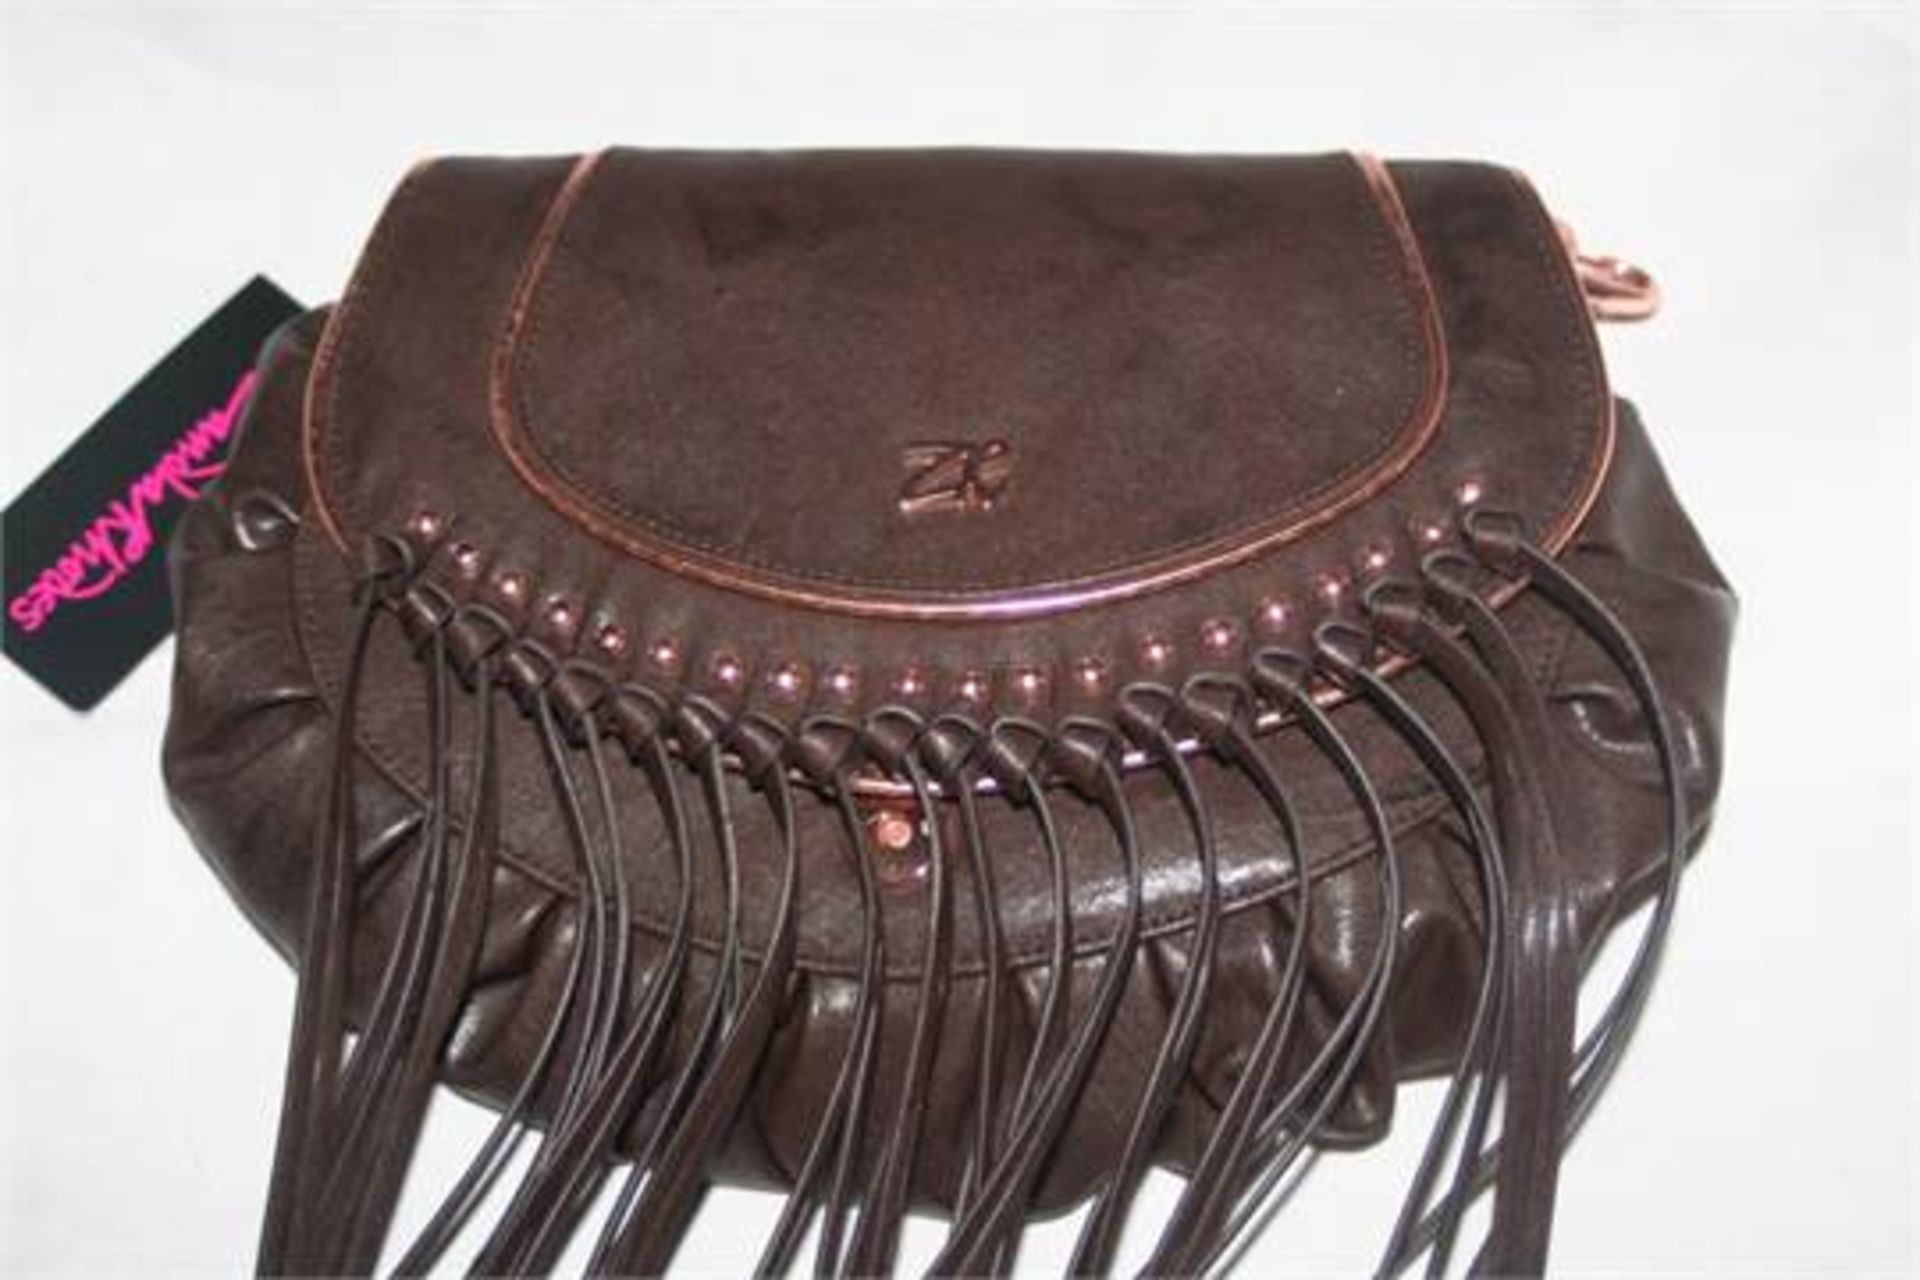 1 x Zandra Rhodes Jada Brown Tassel Fringe Satchel Handbag - Brand New Stock - PU Leather - - Image 3 of 4